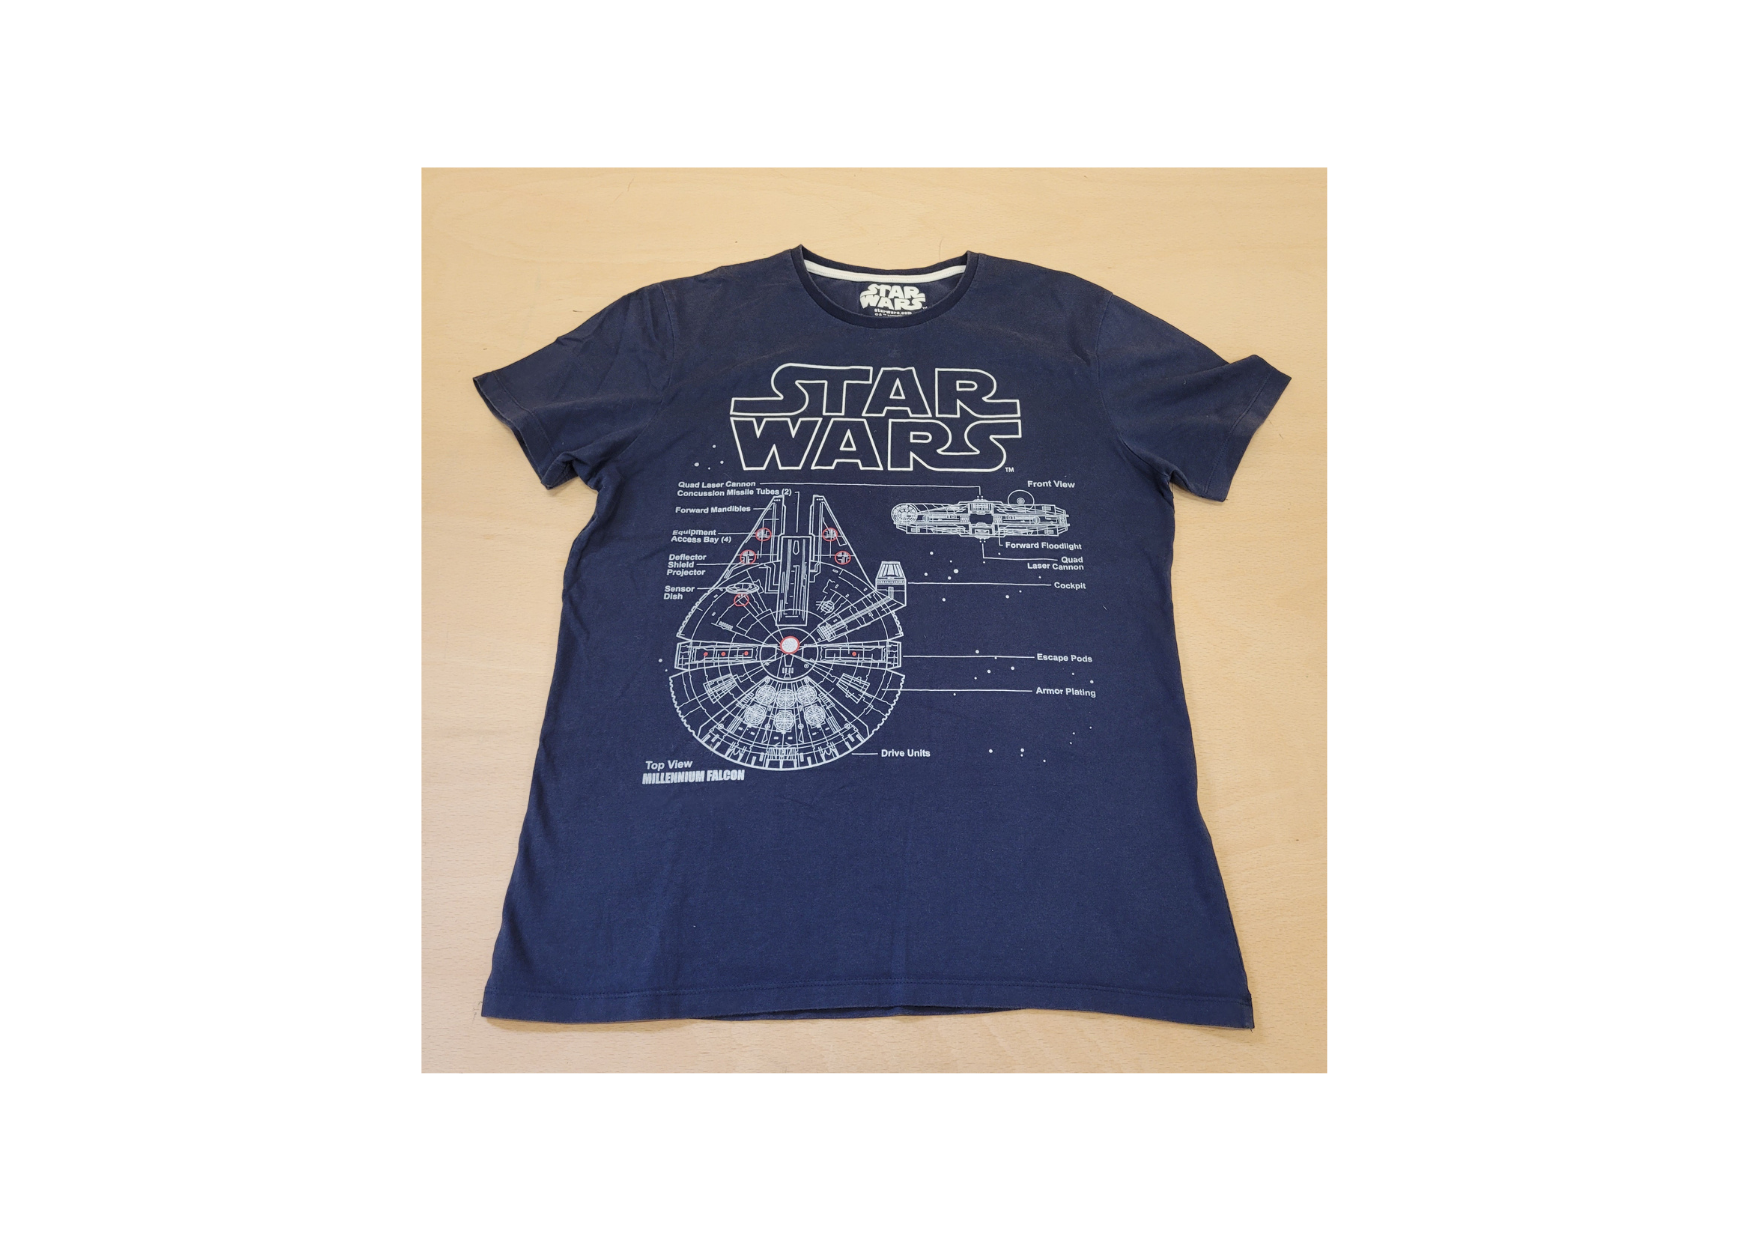 Star Wars Millennium Falcon T Shirt Front View